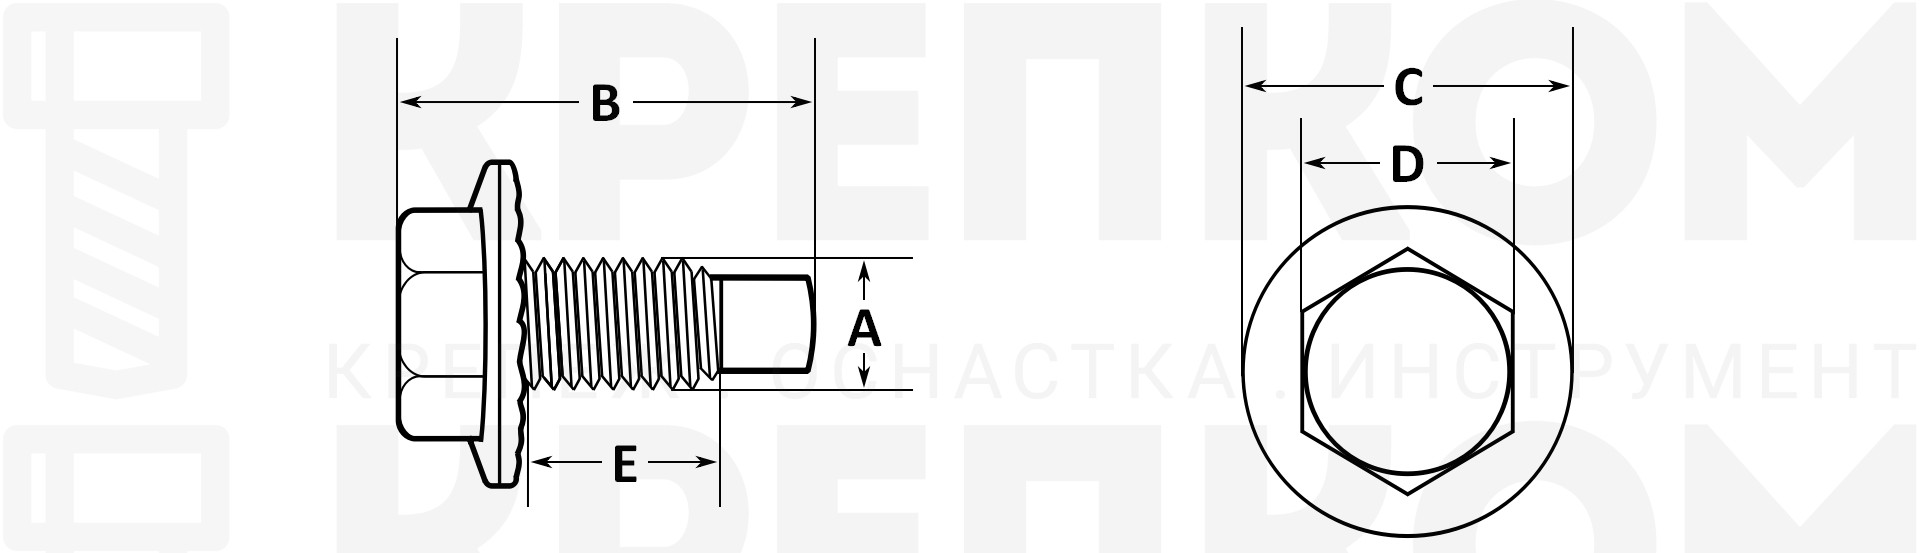 Болт (винт) шестигранный М8 дюймовая резьба с фланцем K2213 - схема, чертеж